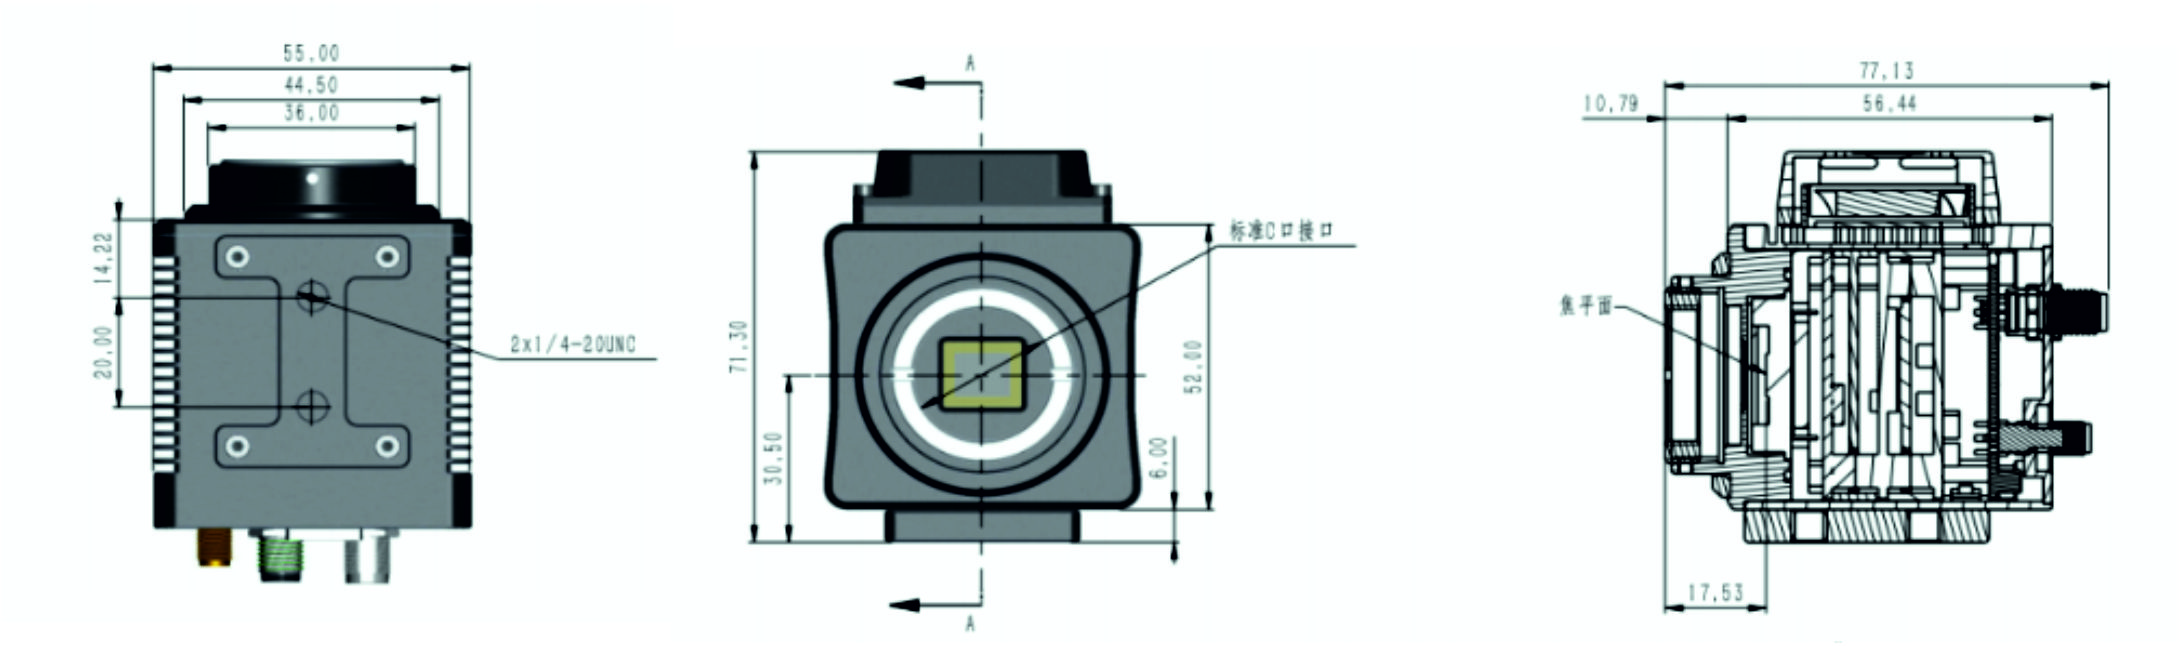 Схема корпуса камеры SWIR SX1300